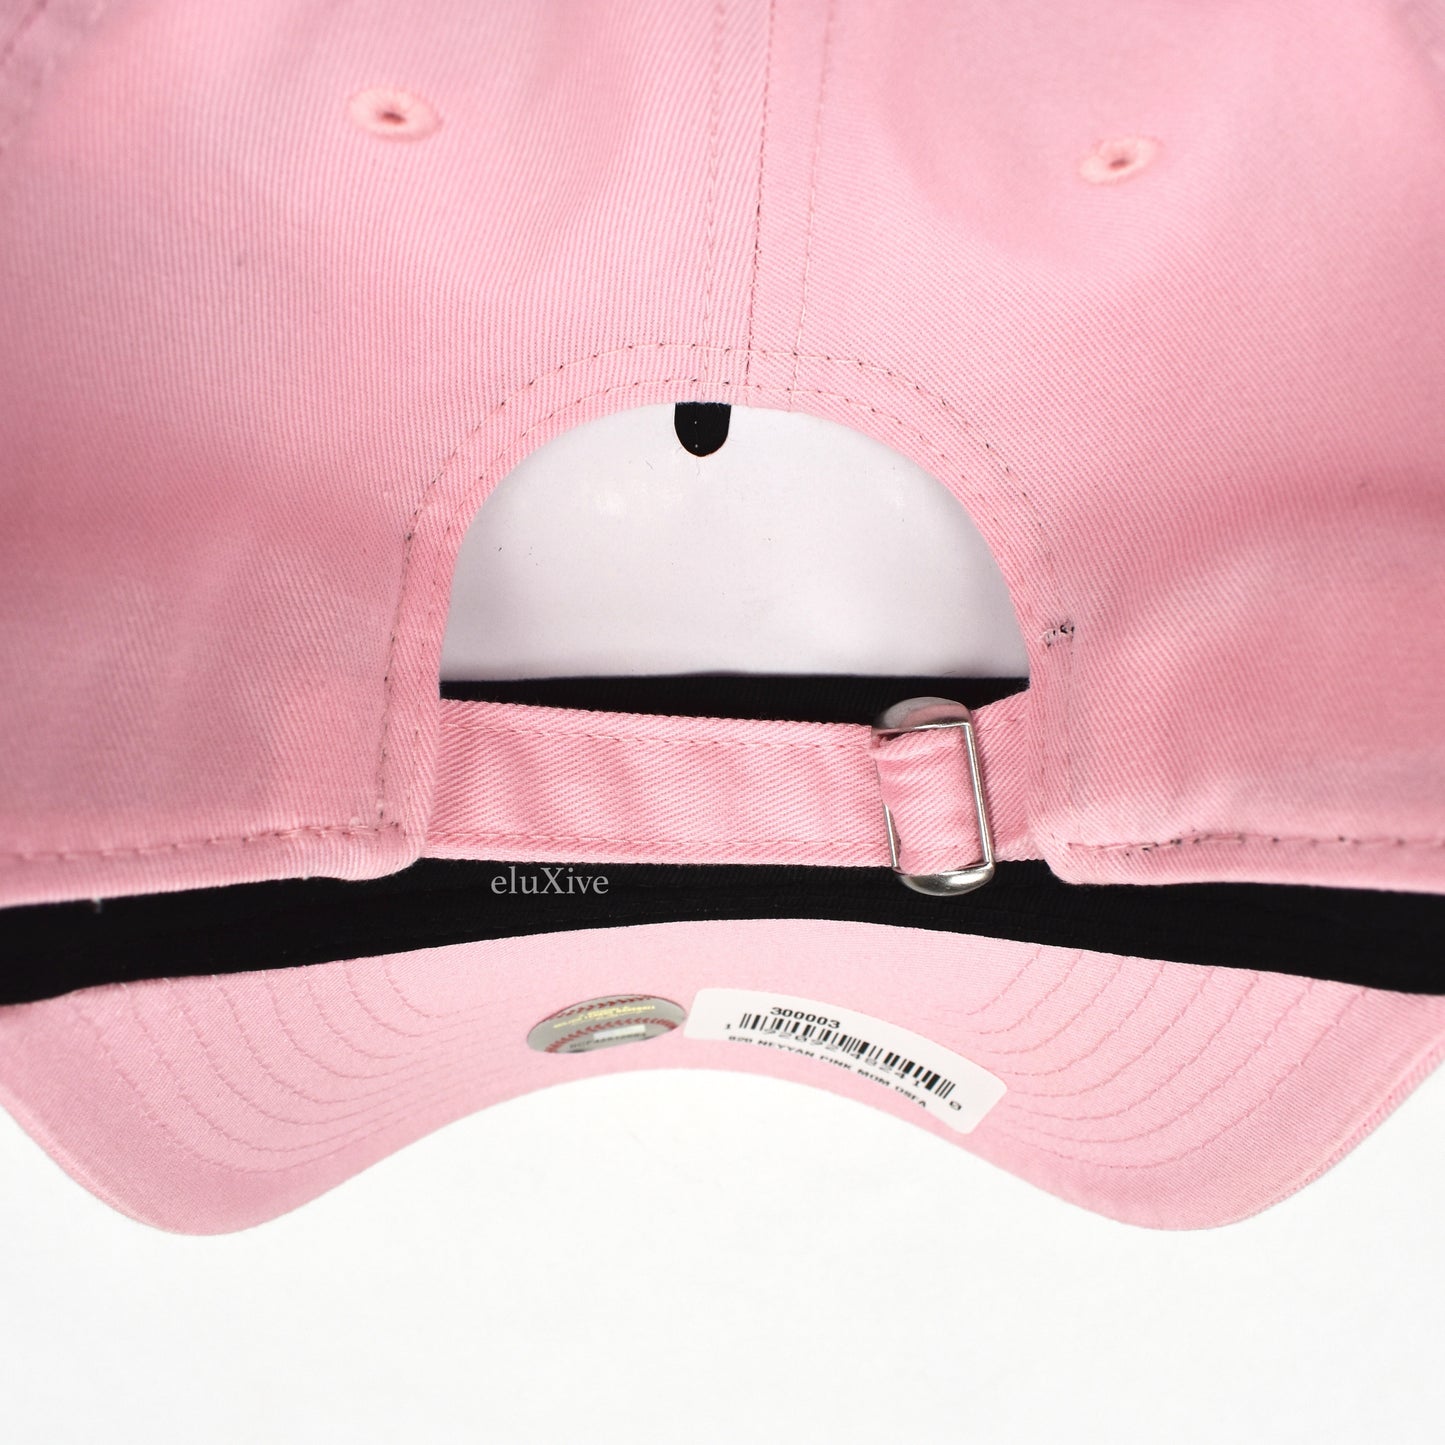 New Era - MoMA Edition Yankees Adjustable Hat (Pink)